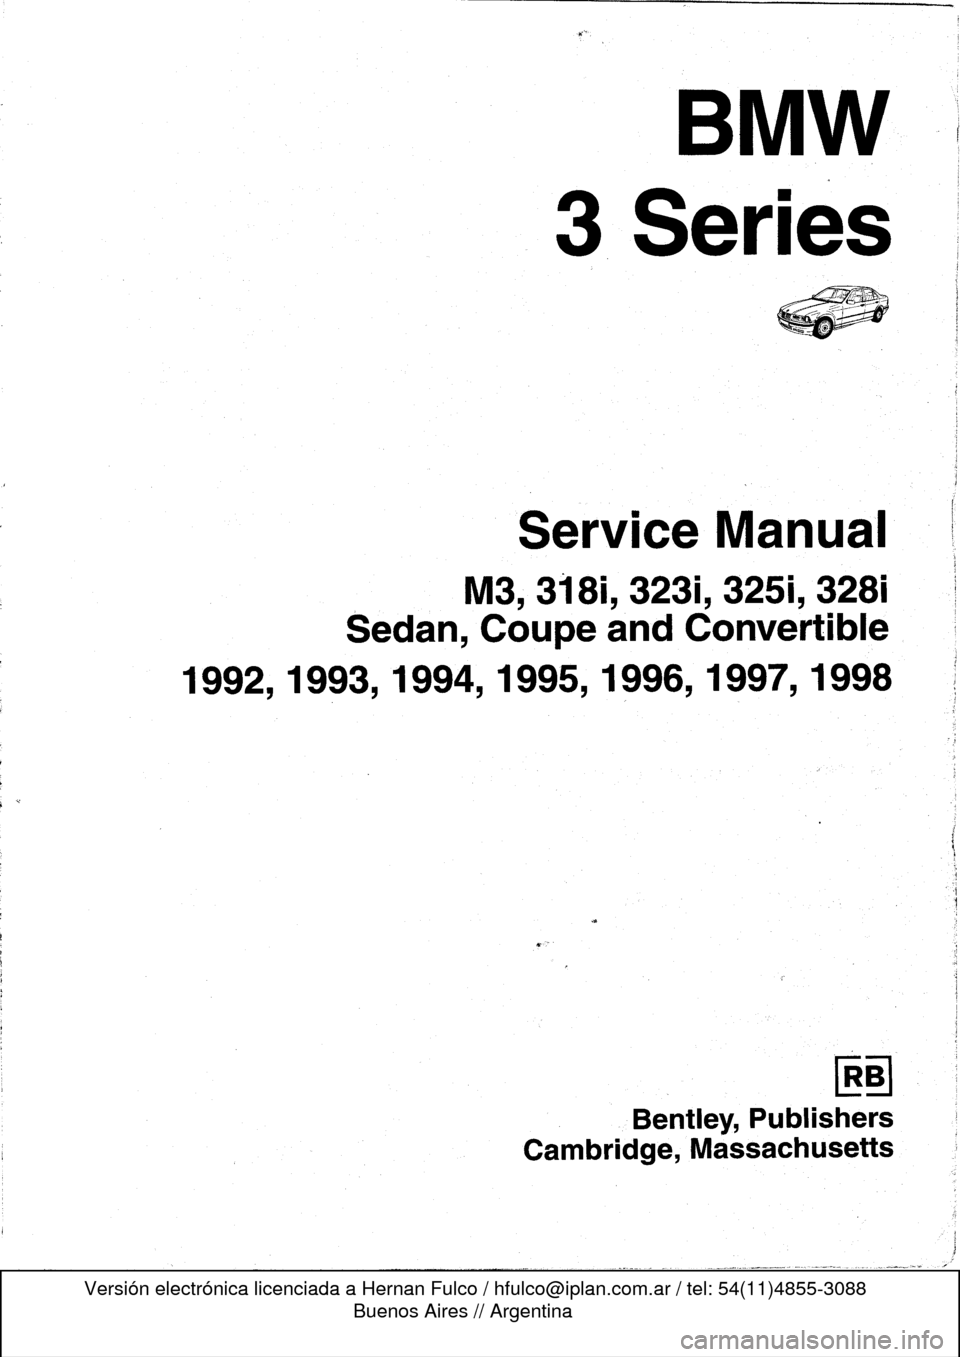 BMW 328i 1998 E36 Workshop Manual 
B
mw

3
Series

M3,
3181,3231,3251,
3281

Sedan,
Coupe
and
Convertible

1992,1993,1994,1995,
1996,1997,
1998

Bentley,
Publishers

Cambridge,
Massachusetts 